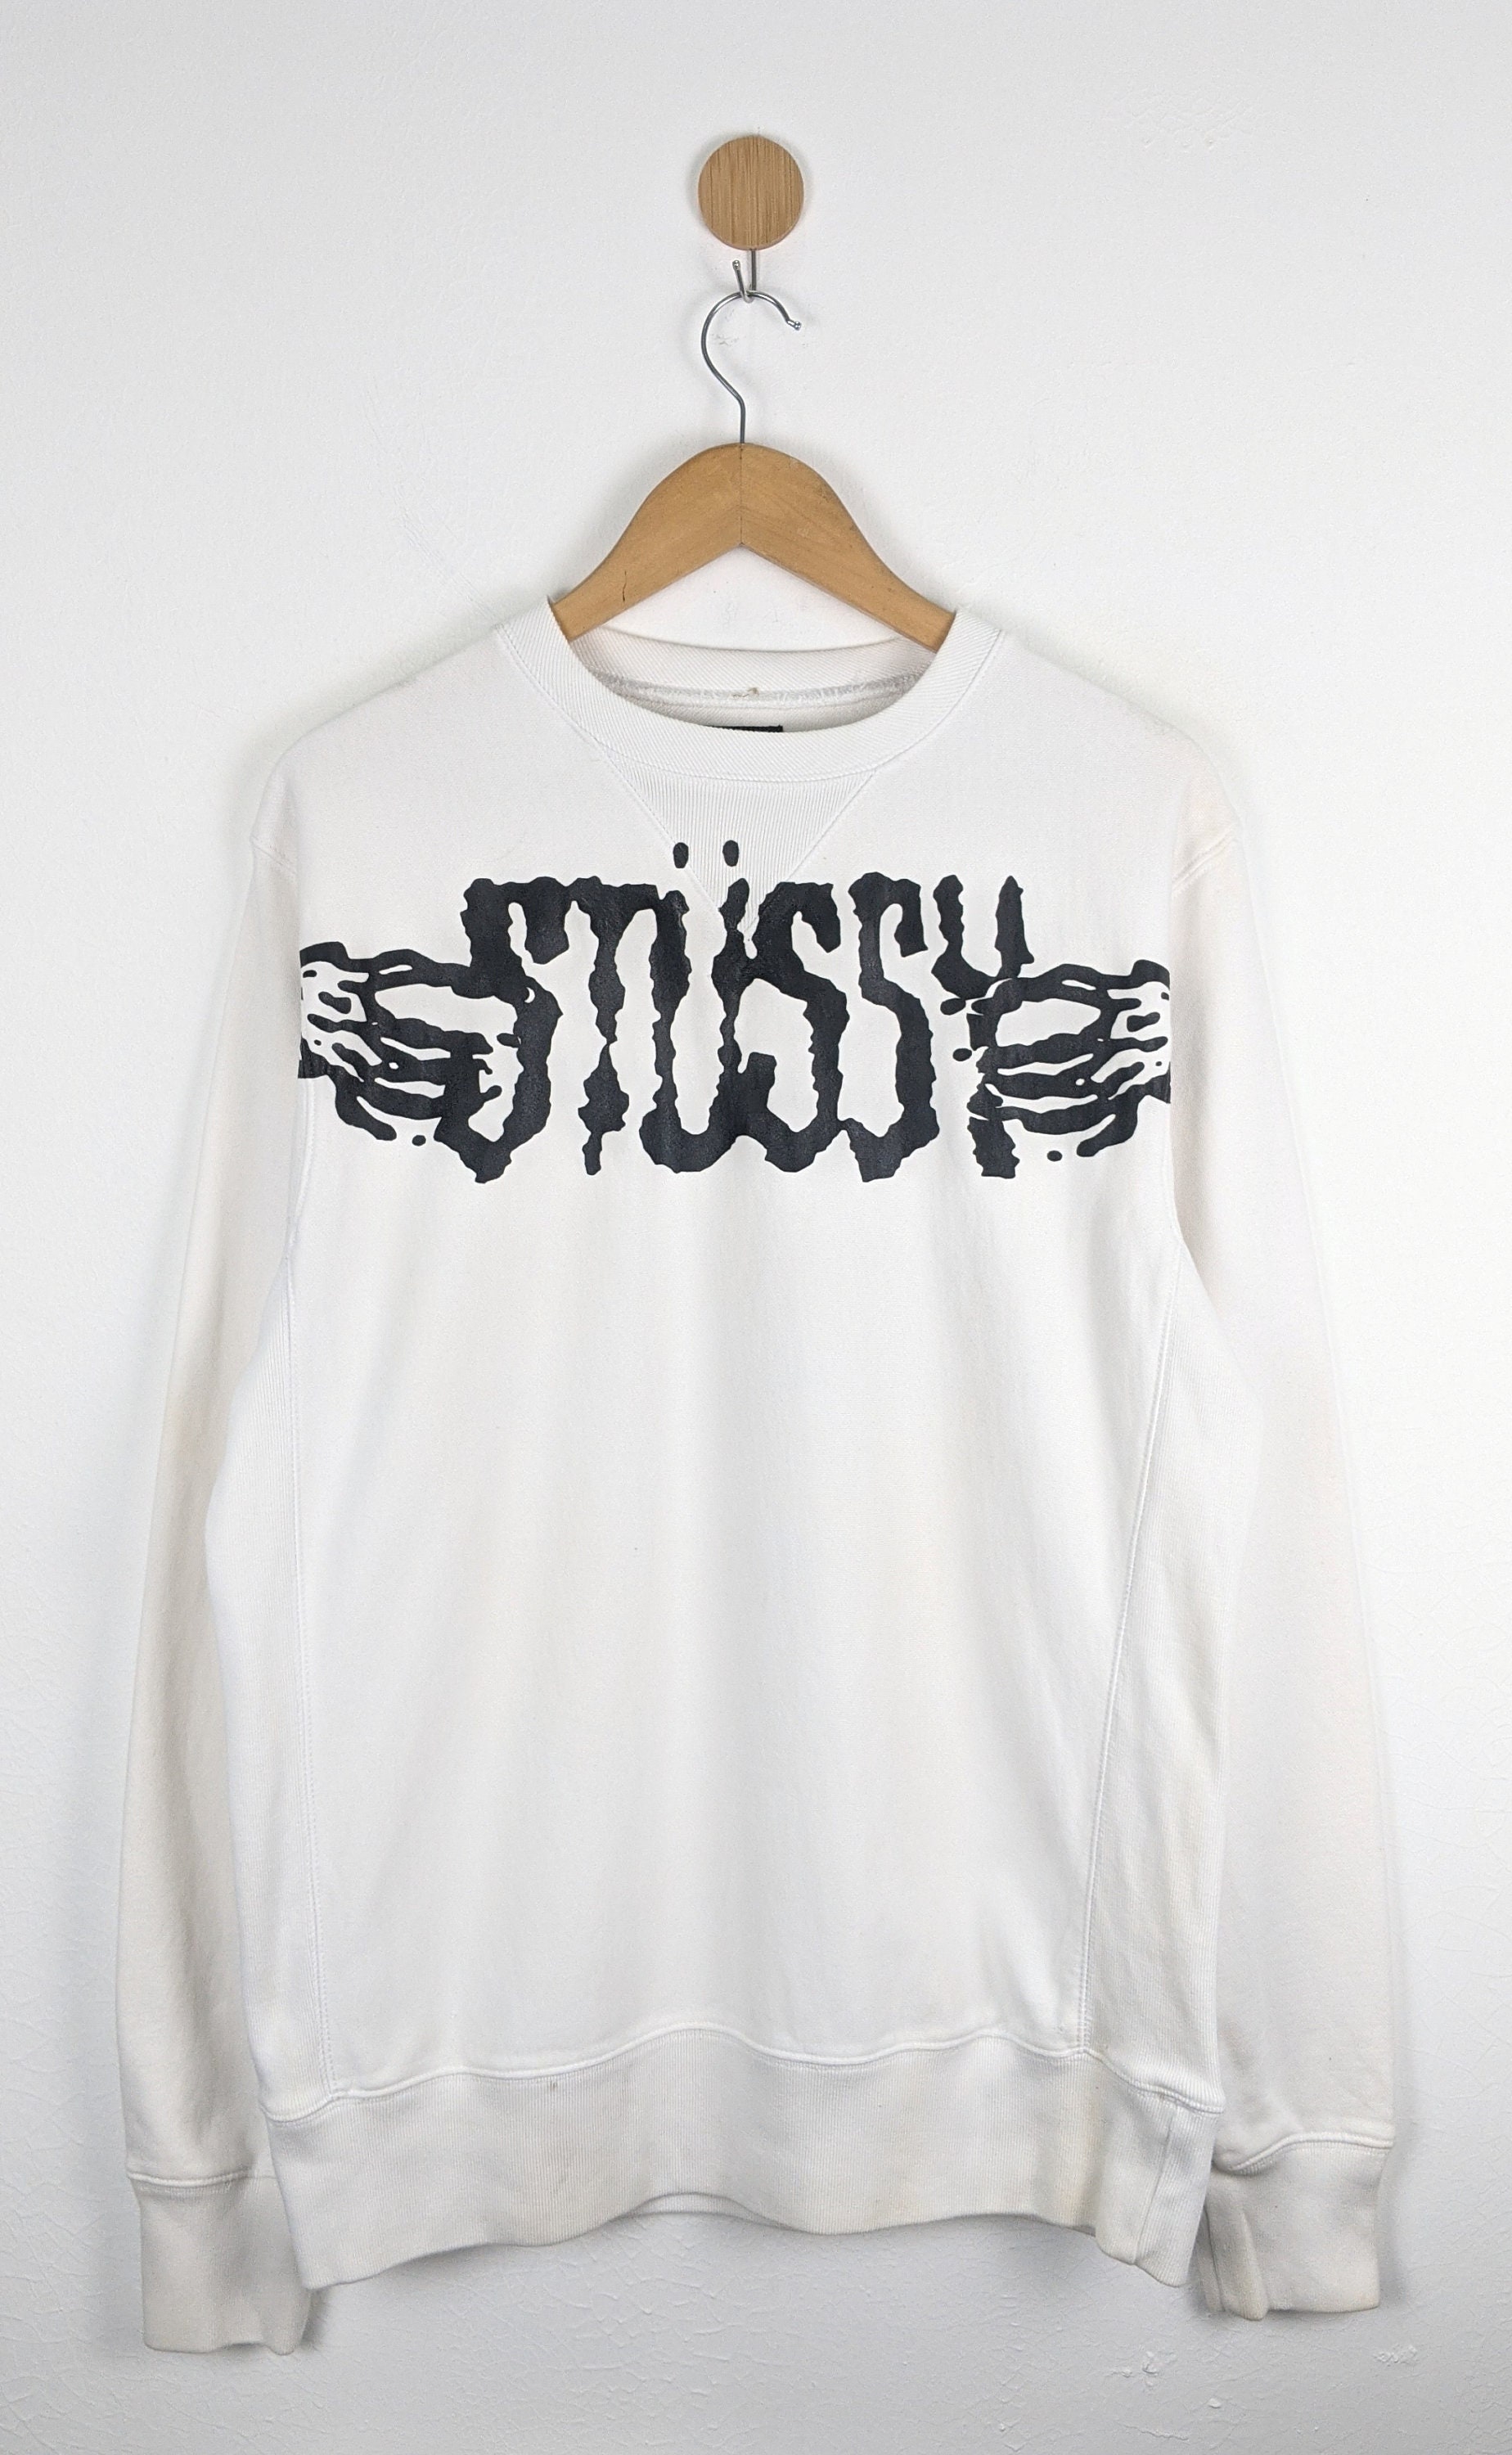 90's Stussy Monogram Long Sleeve Cotton Shirts Black - Size M